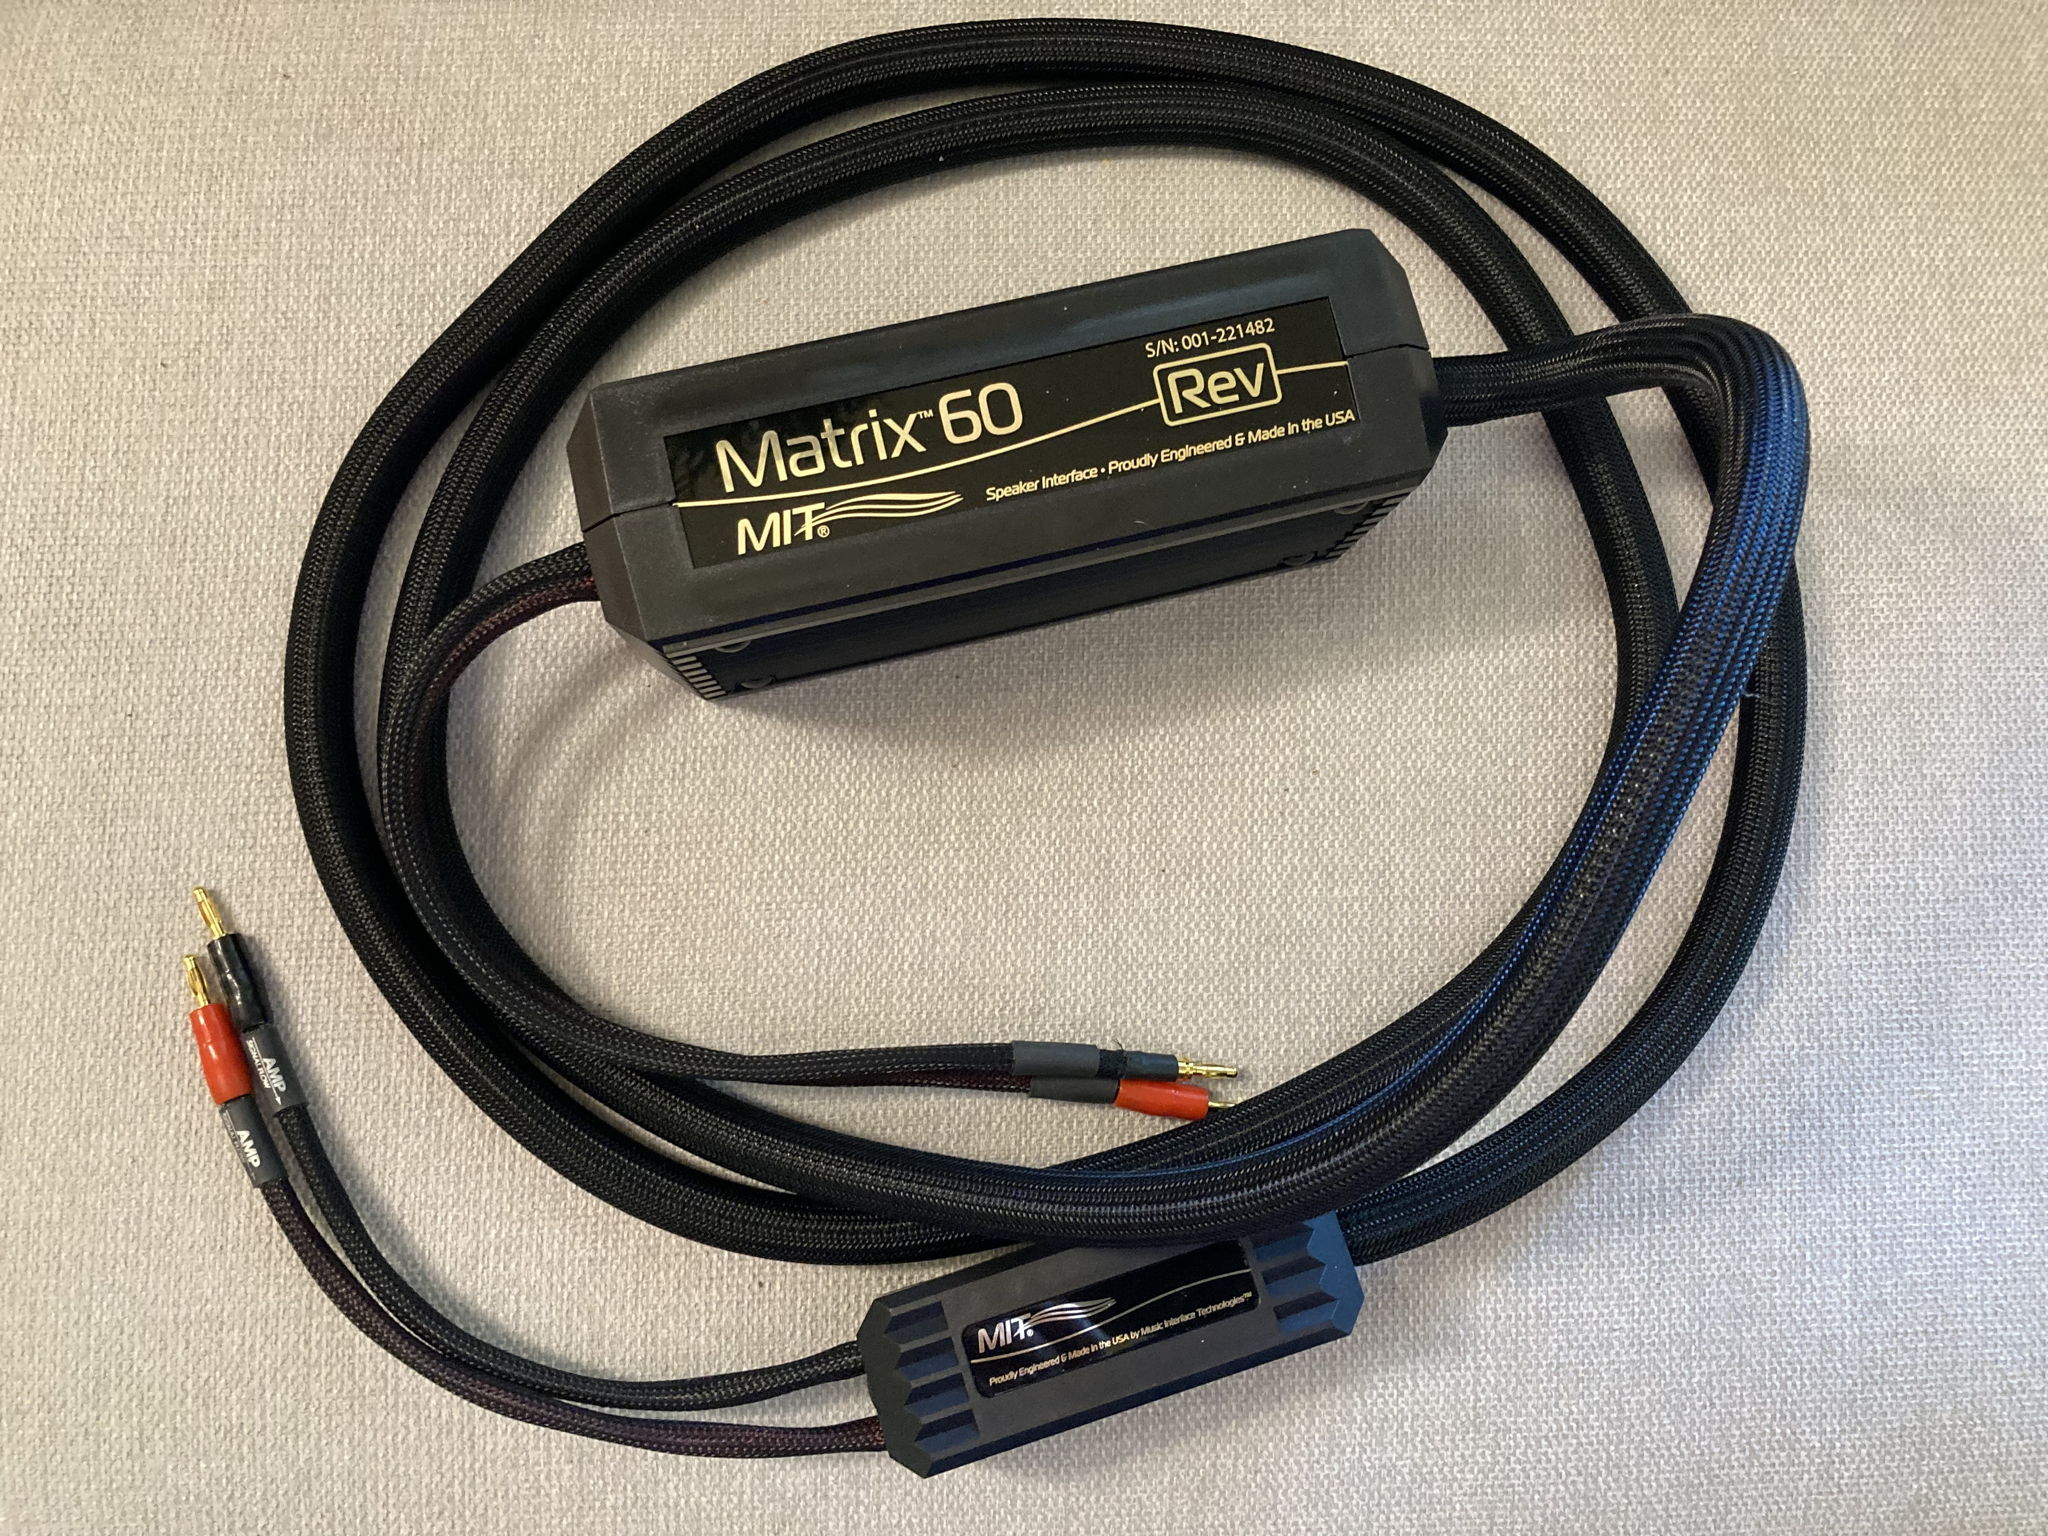 MIT Cables MATRIX 60 REV SPKR CABLE, ORACLE-LEVEL PERFO...